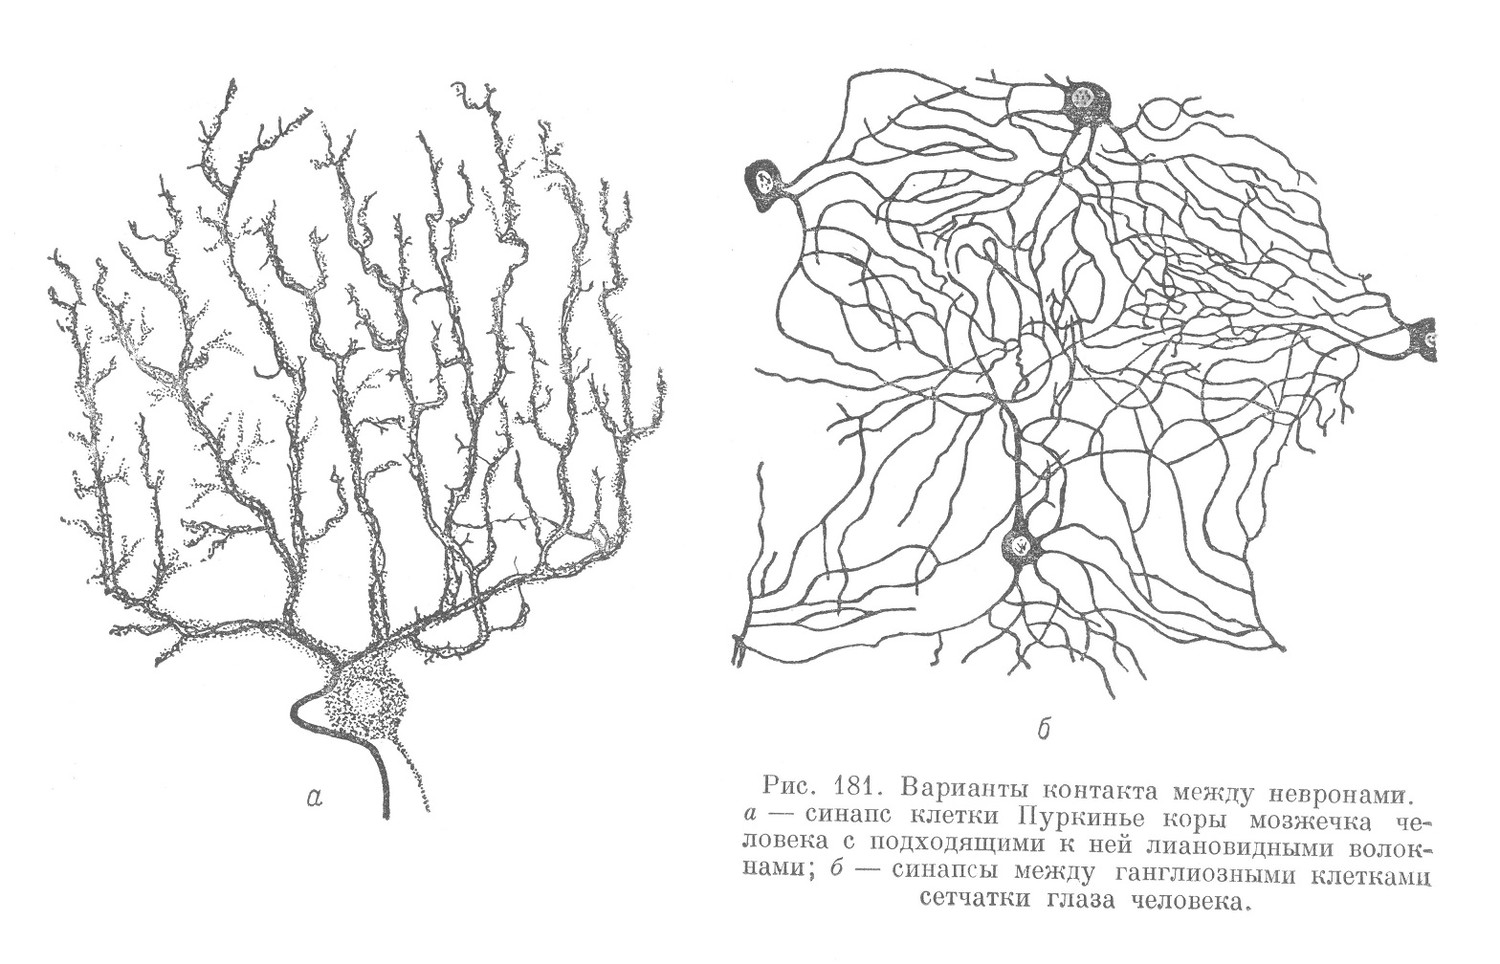 контакт между невронами